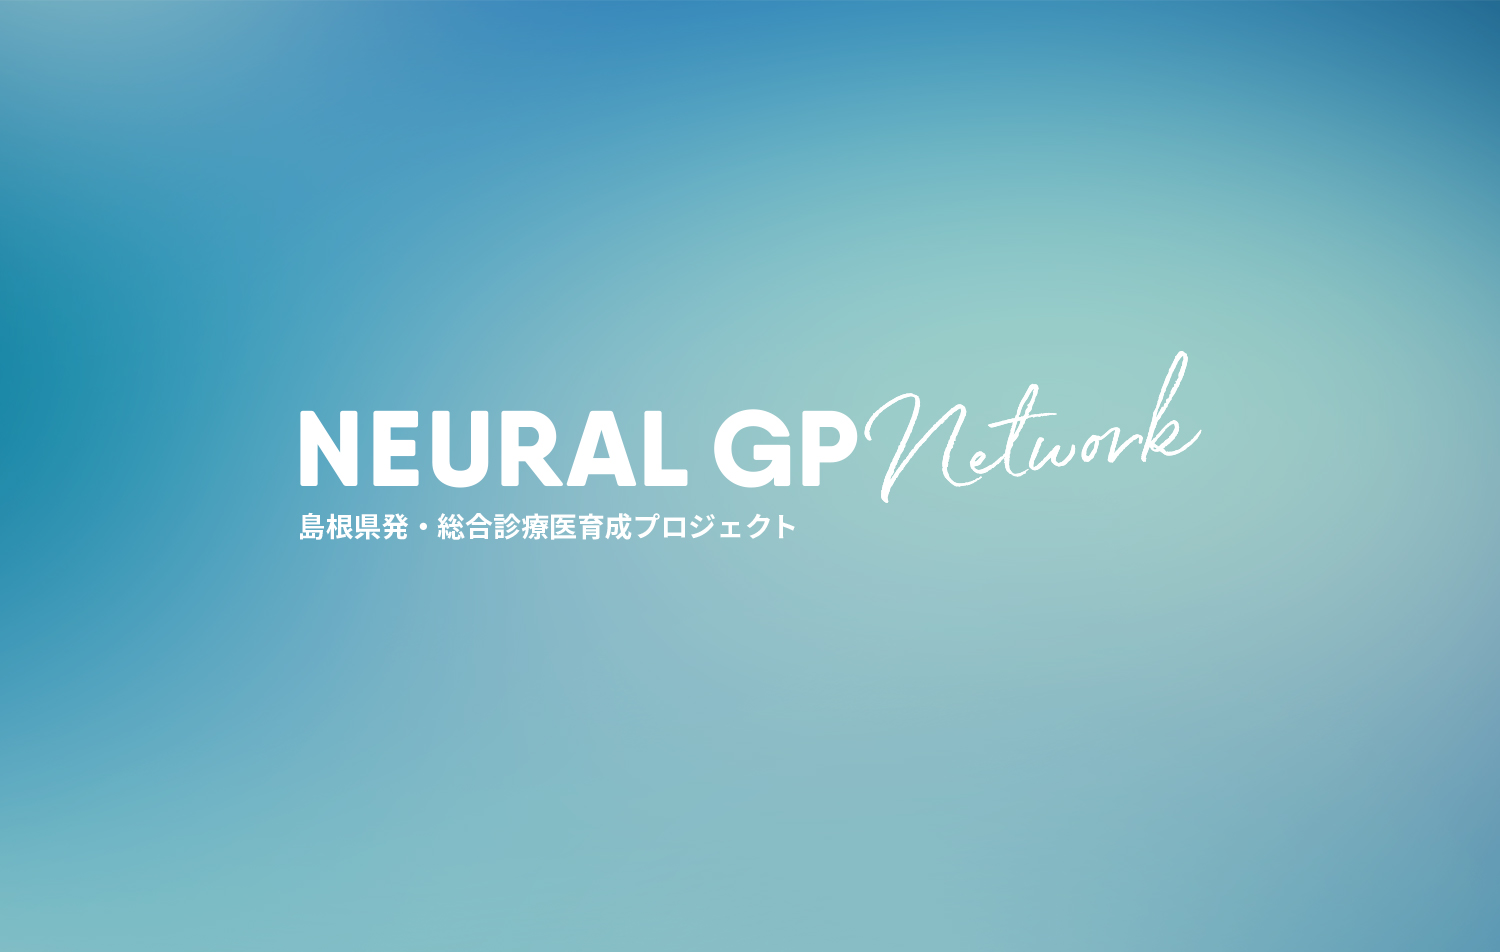 NEURAL GP Network – しまね総合診療センター 総合診療医養成プロジェクト